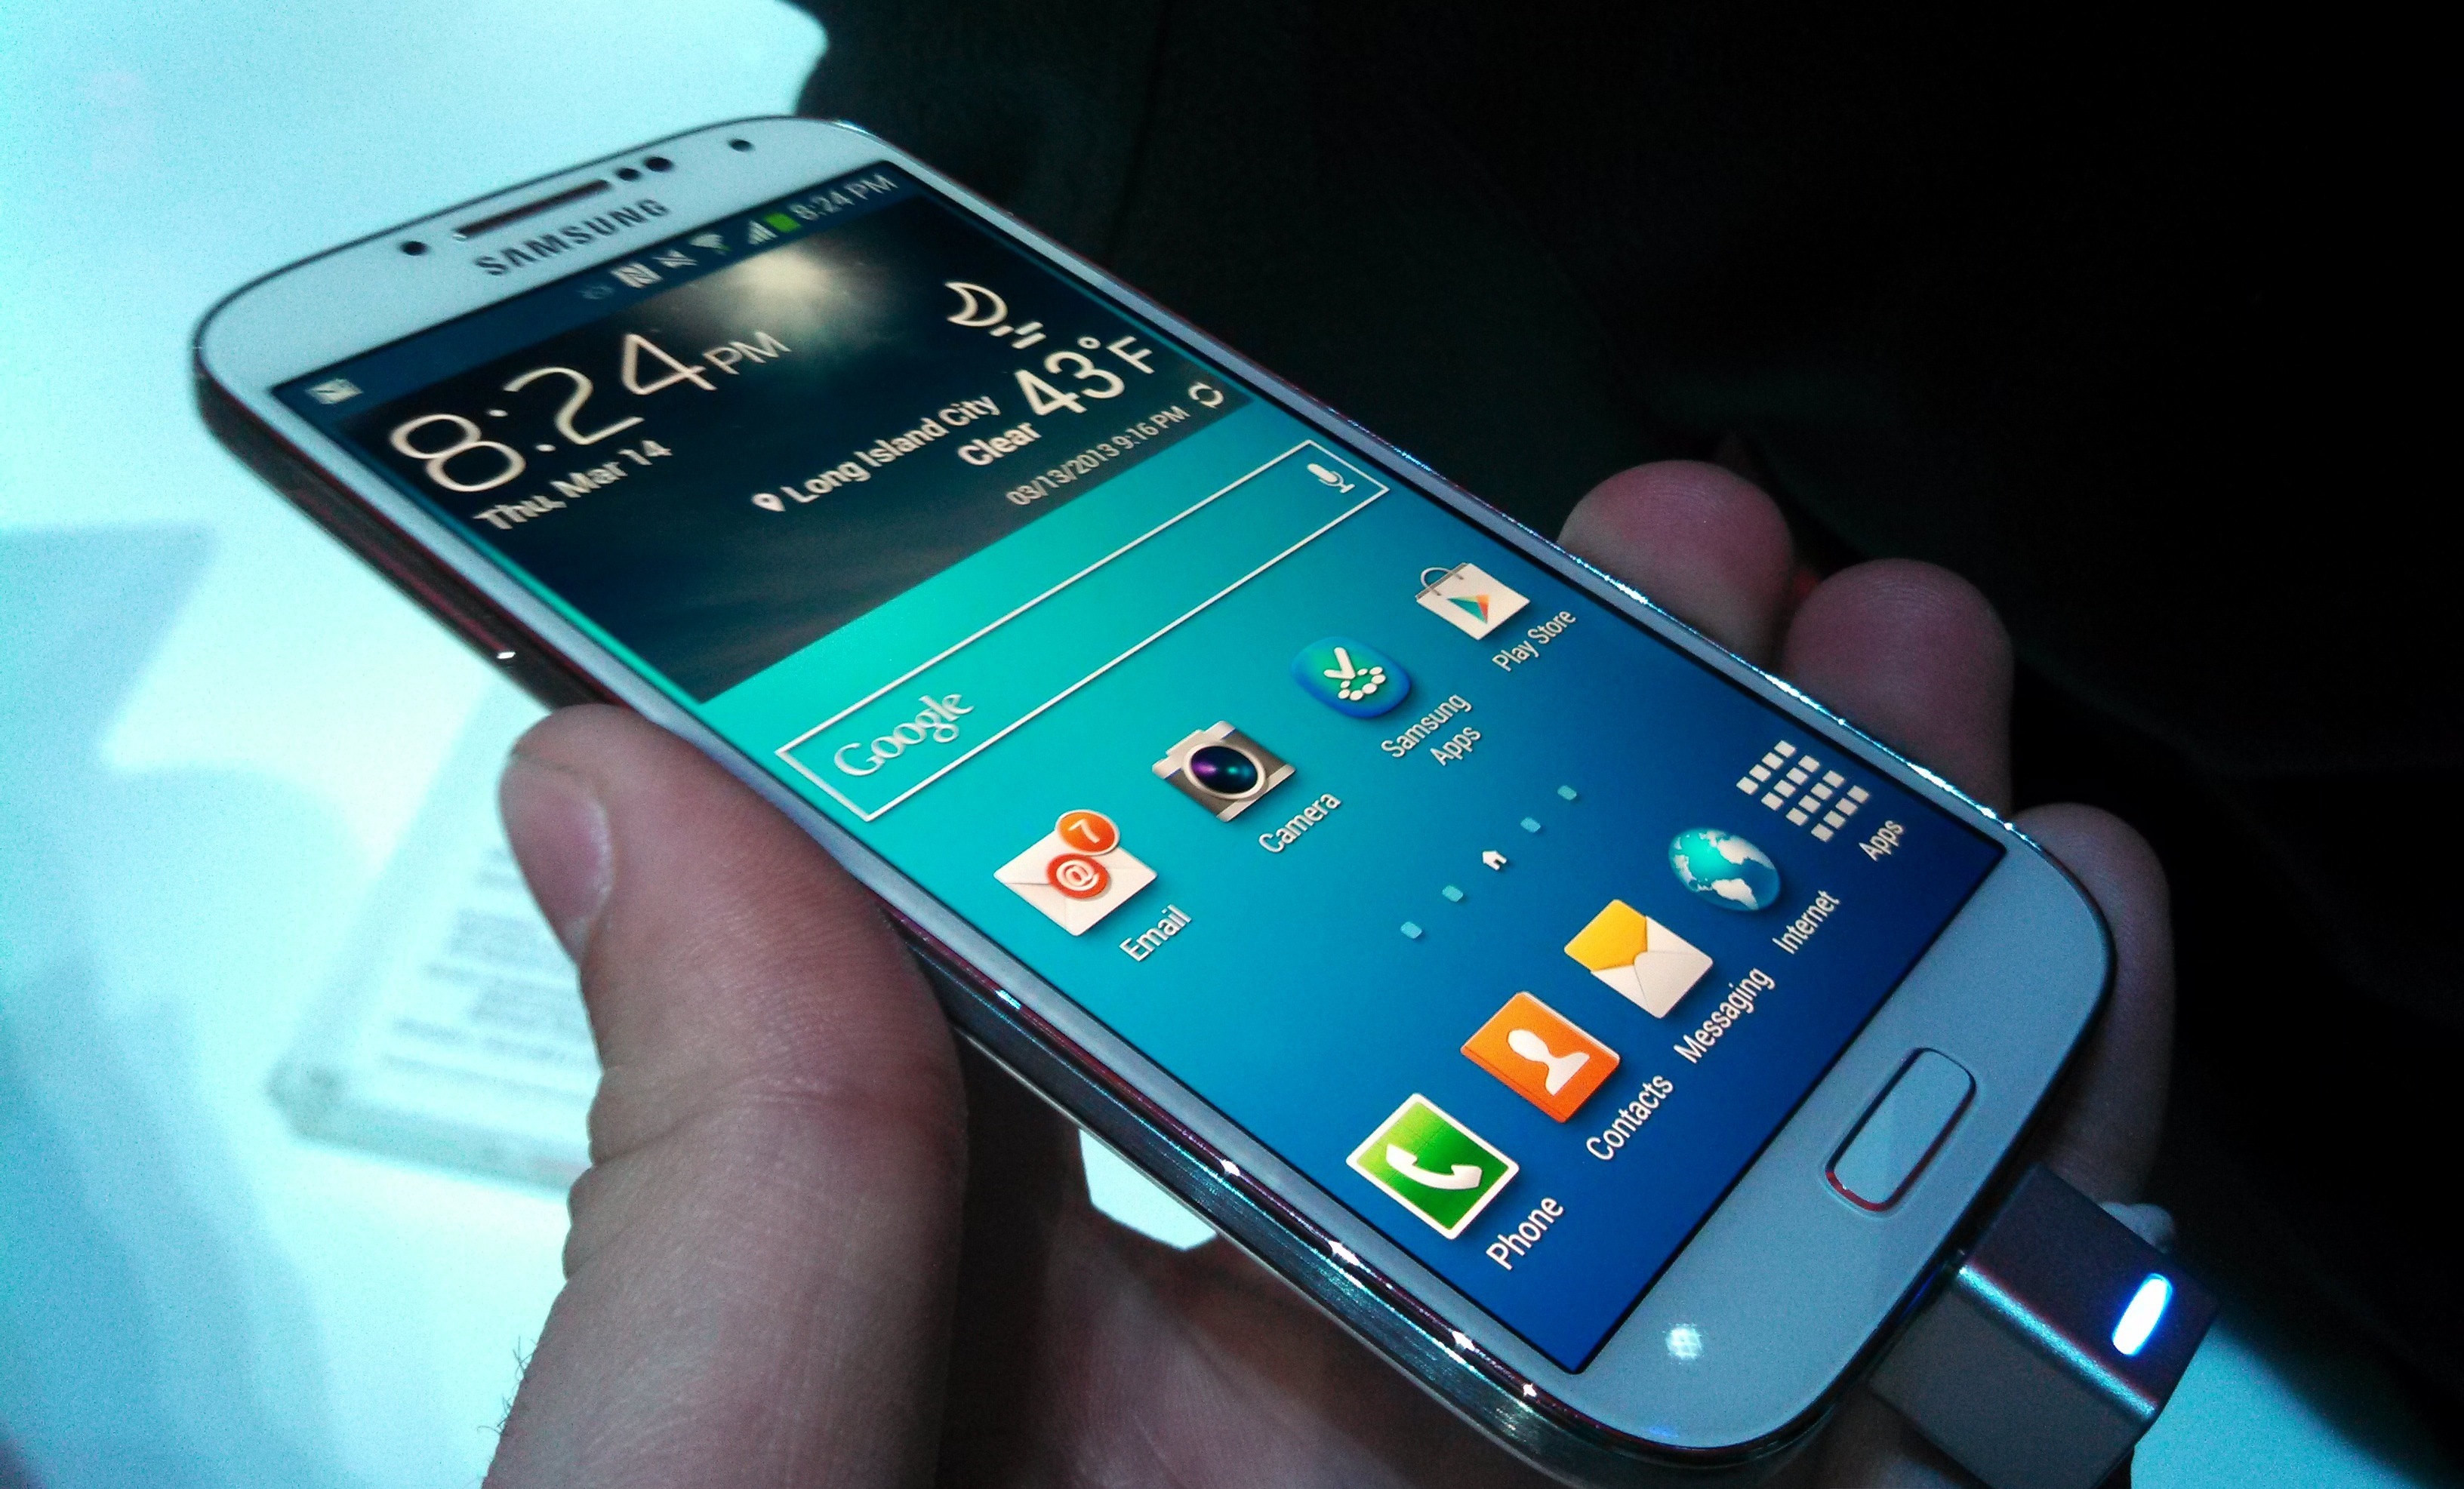 Samsung-Galaxy-S4-front-angled.jpg